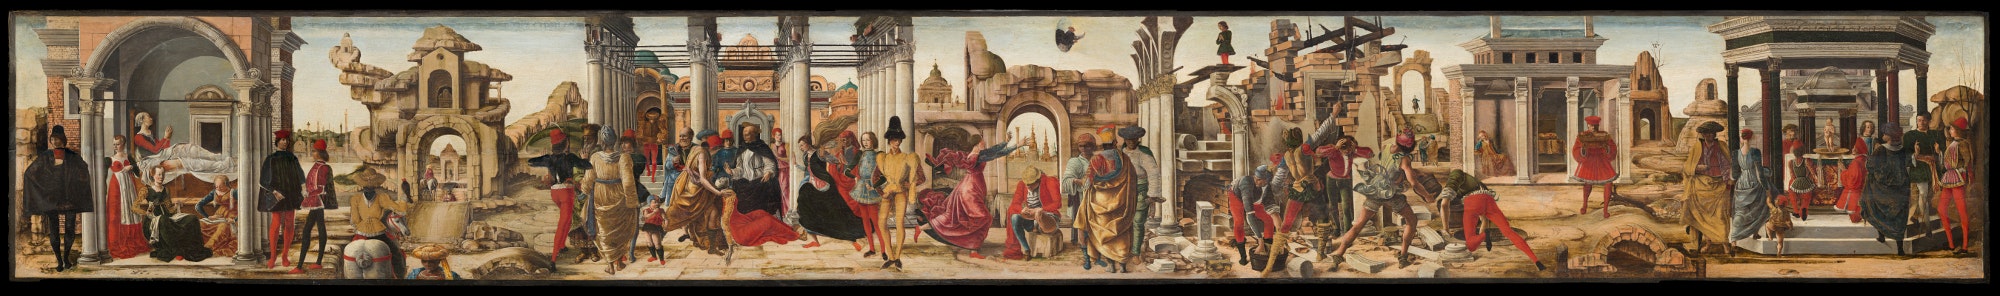 09_Storie di San Vincenzo Ferrer_Ercole de' Roberti_ Pinacoteca Vaticana,Roma (1).jpg